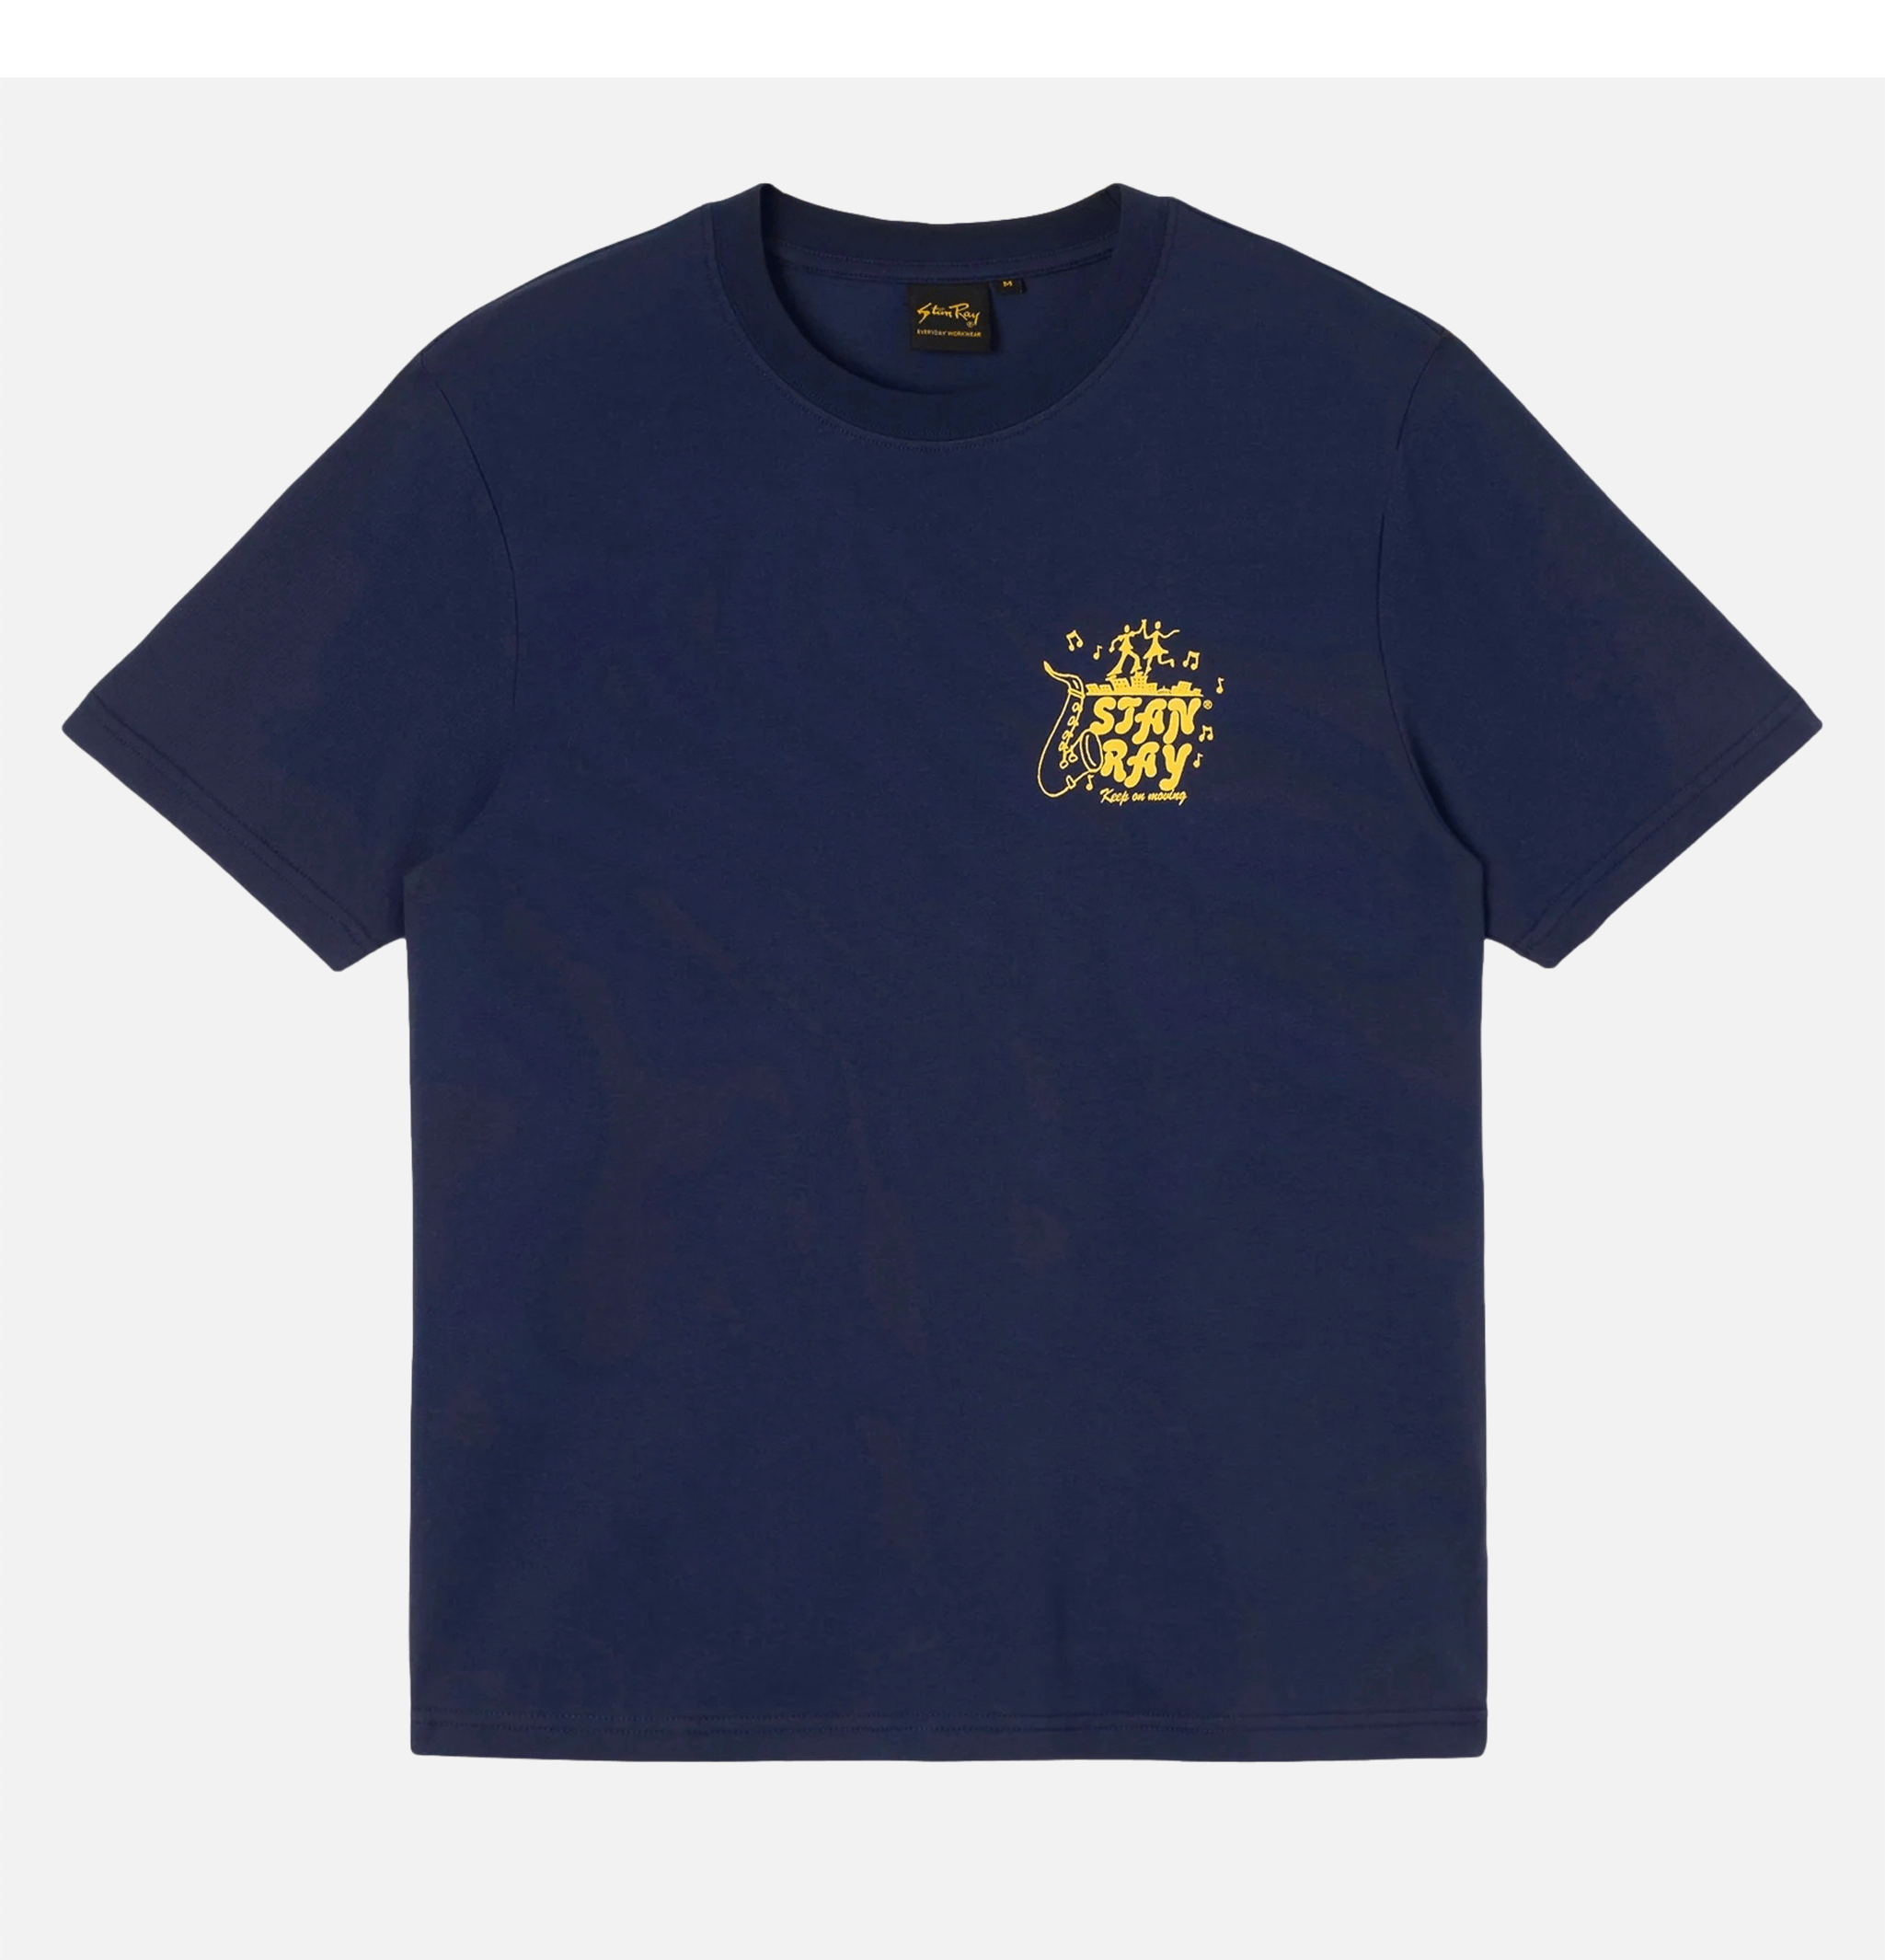 Stan Ray USA Movin T-shirt Navy Blue